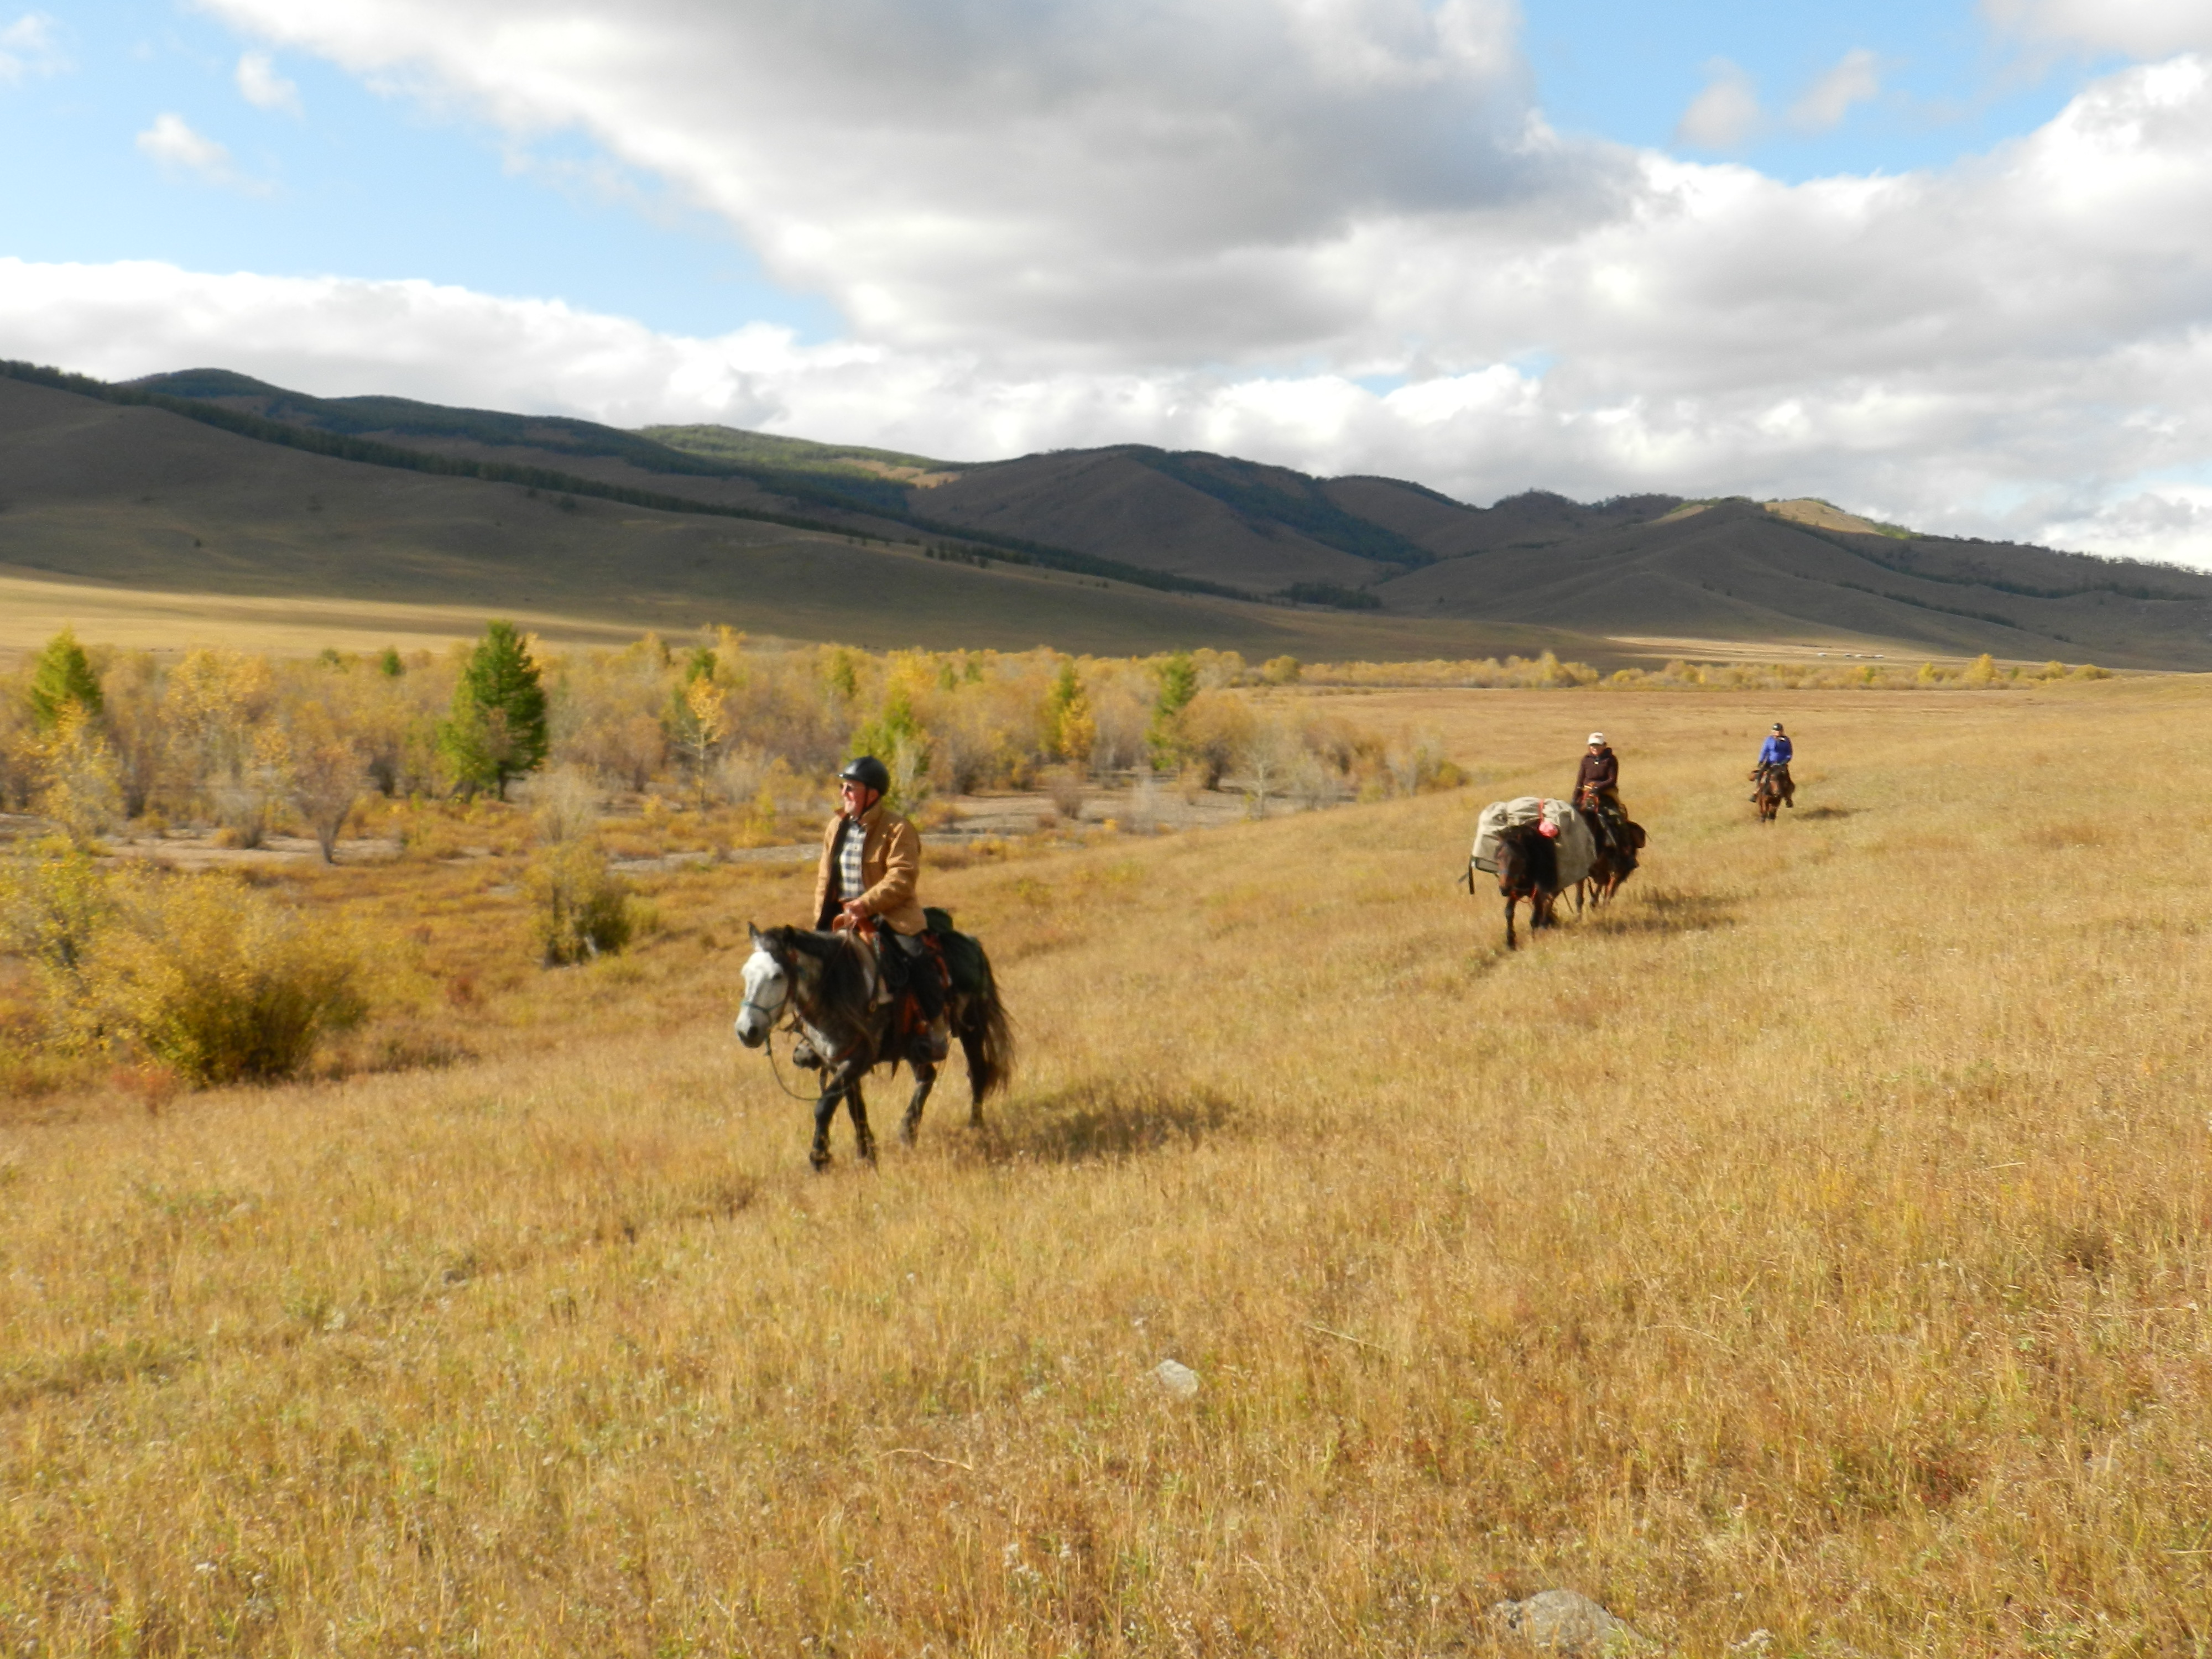 Baruunbayangol Valley, Gorkhi-Terelj National Park, Mongolia